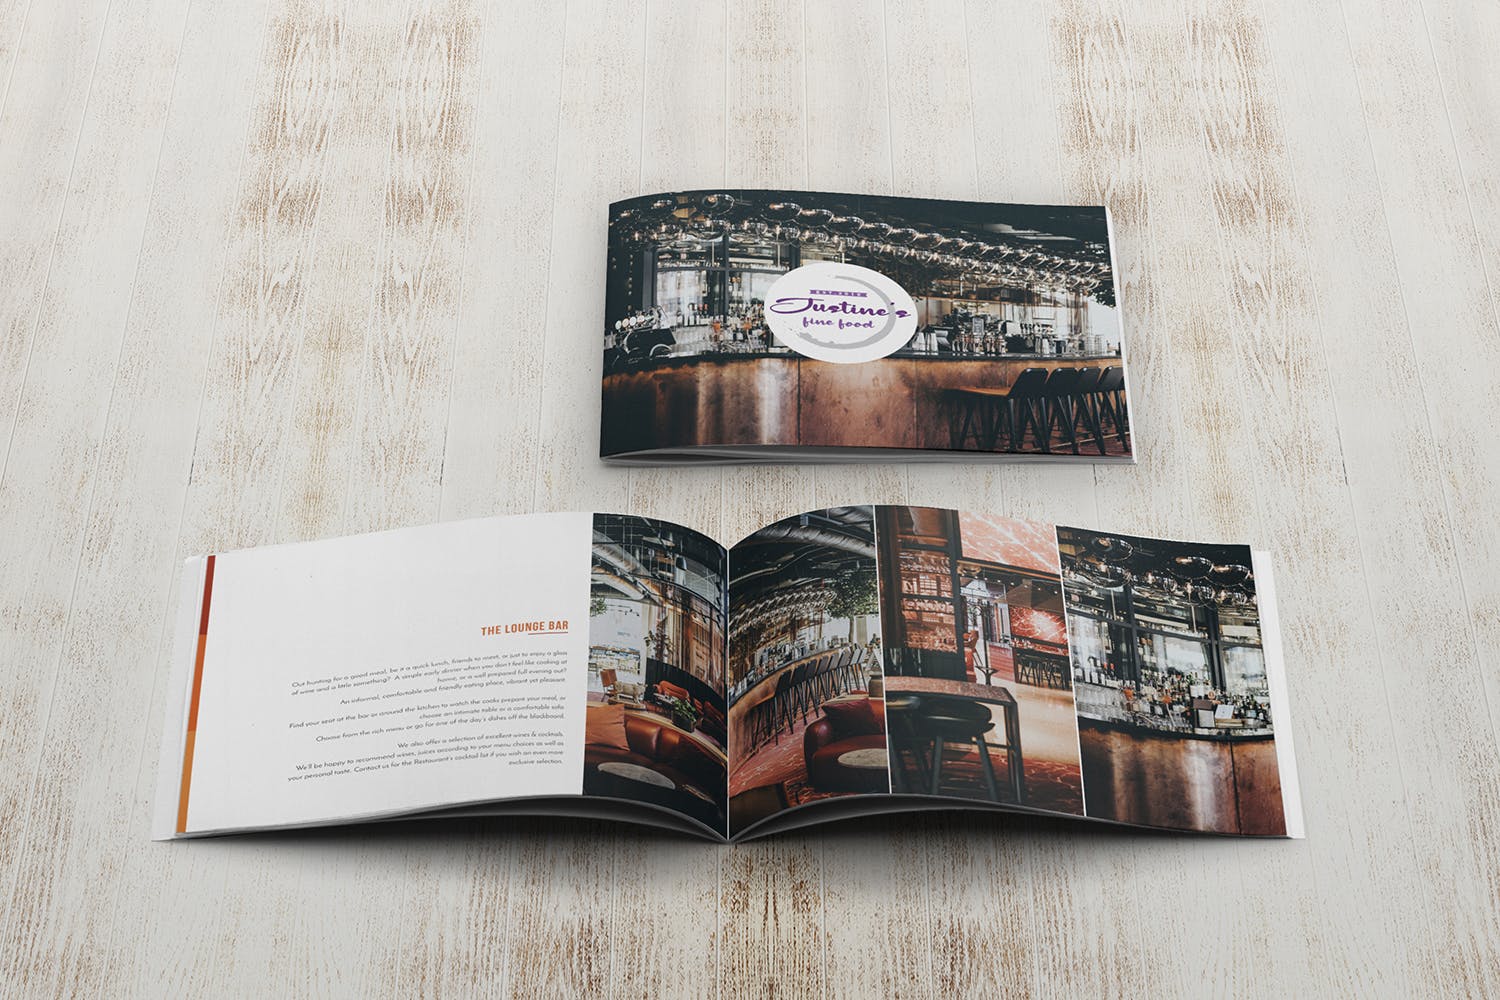 企业画册产品手册封面&内页版式设计正视图样机第一素材精选 Cover & Open Landscape Brochure Mockup Front View插图(2)